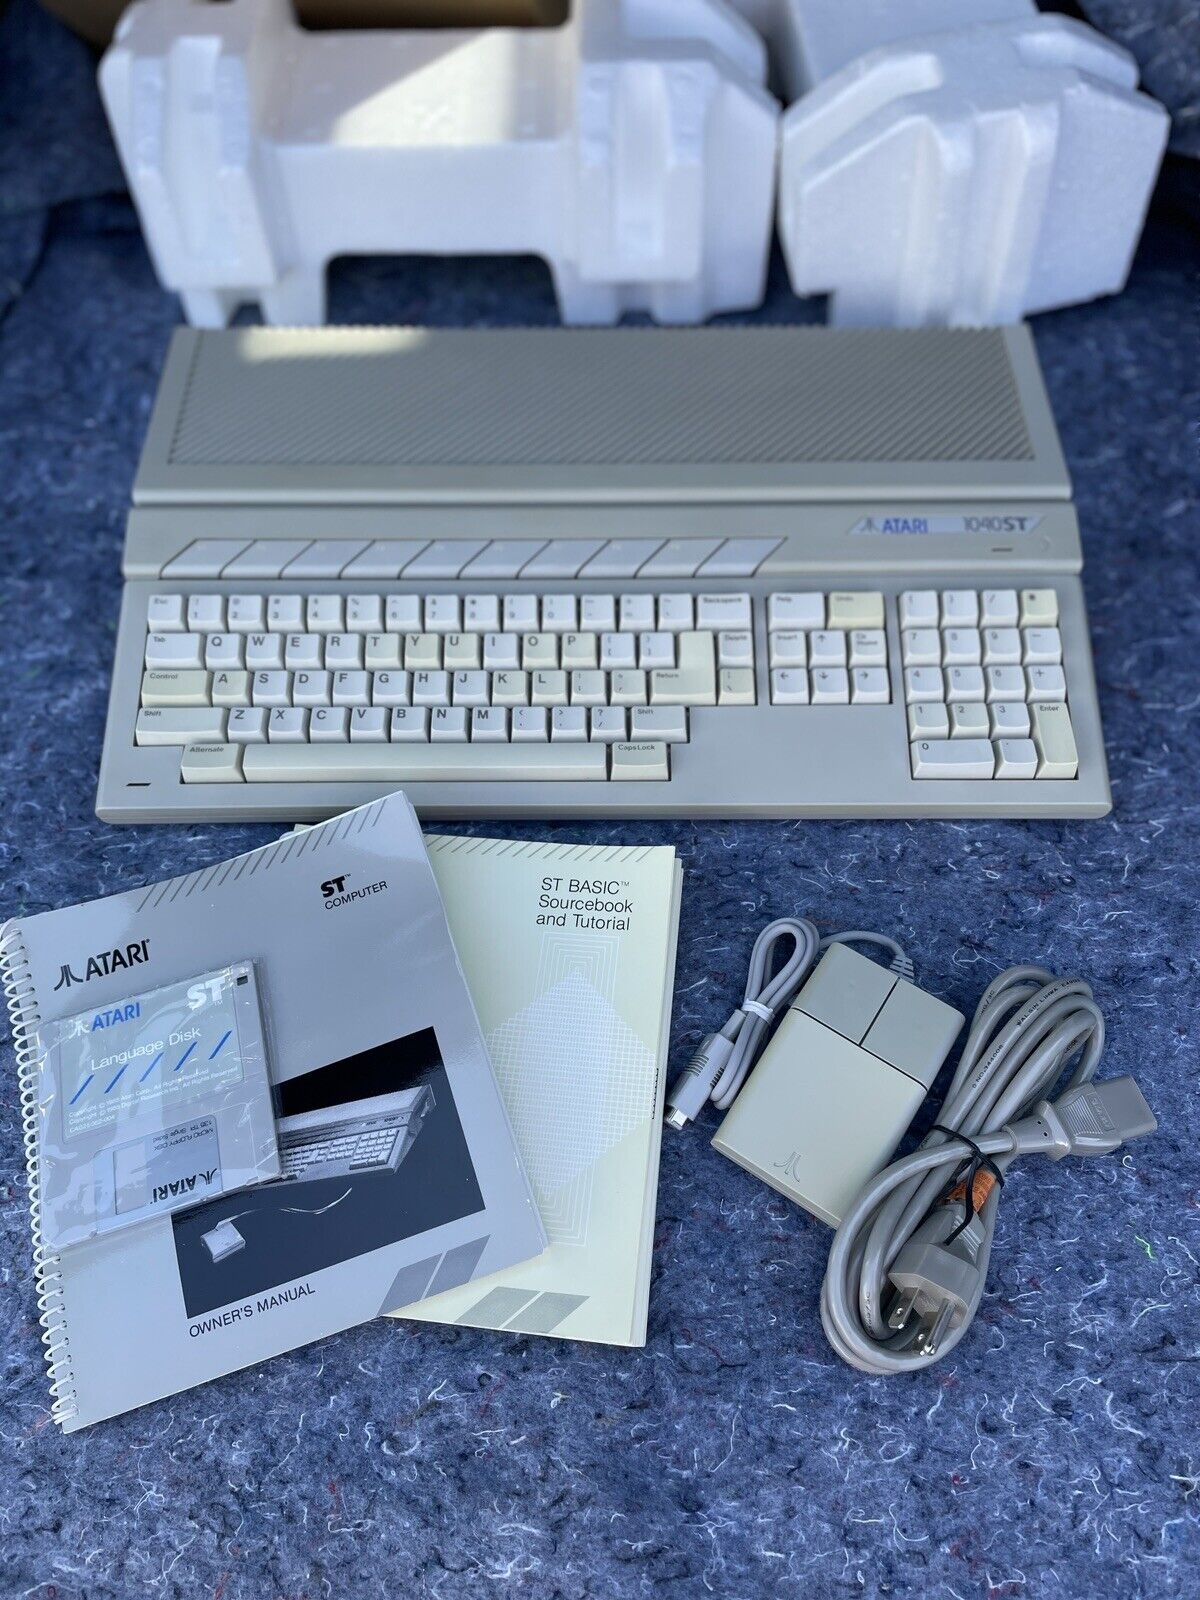 Atari 1040stf Excellent In Box With Accessories And SM124 Monochrome Monitor